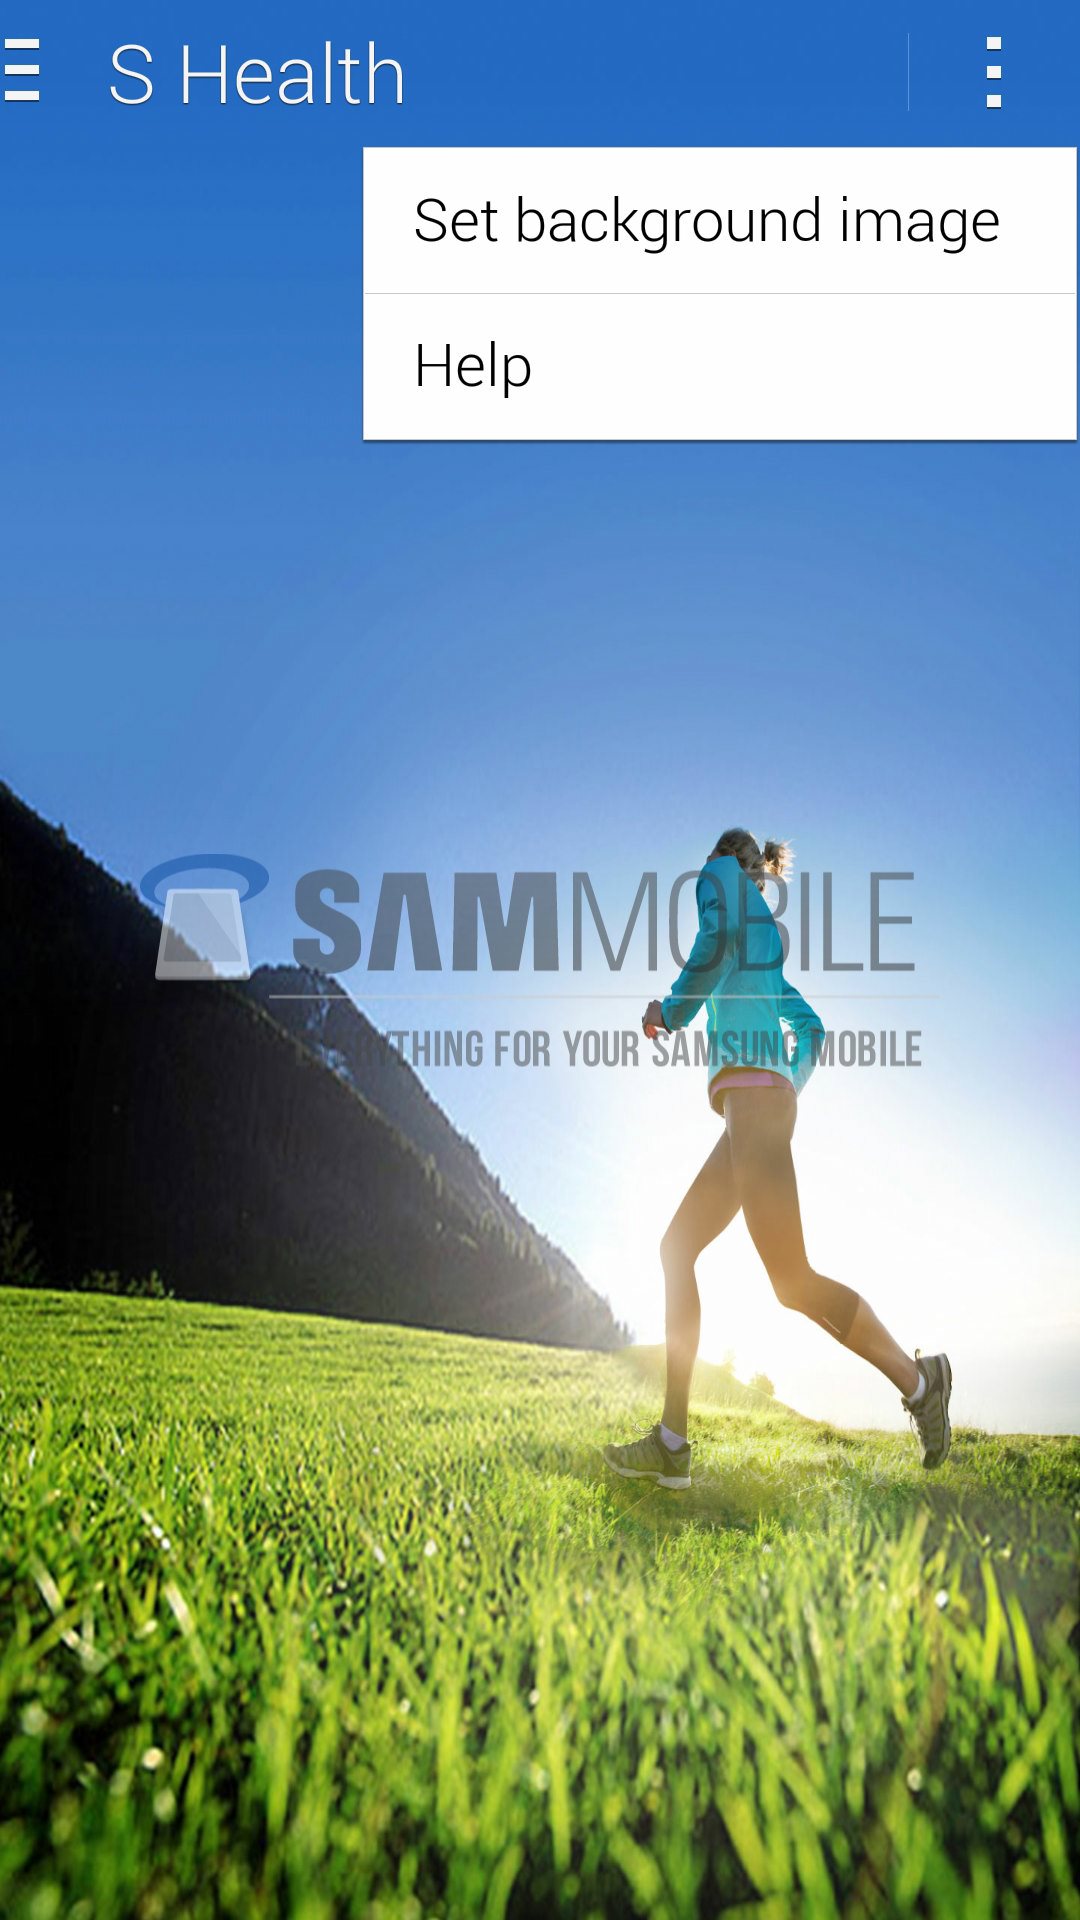 SamMobile S Health 14